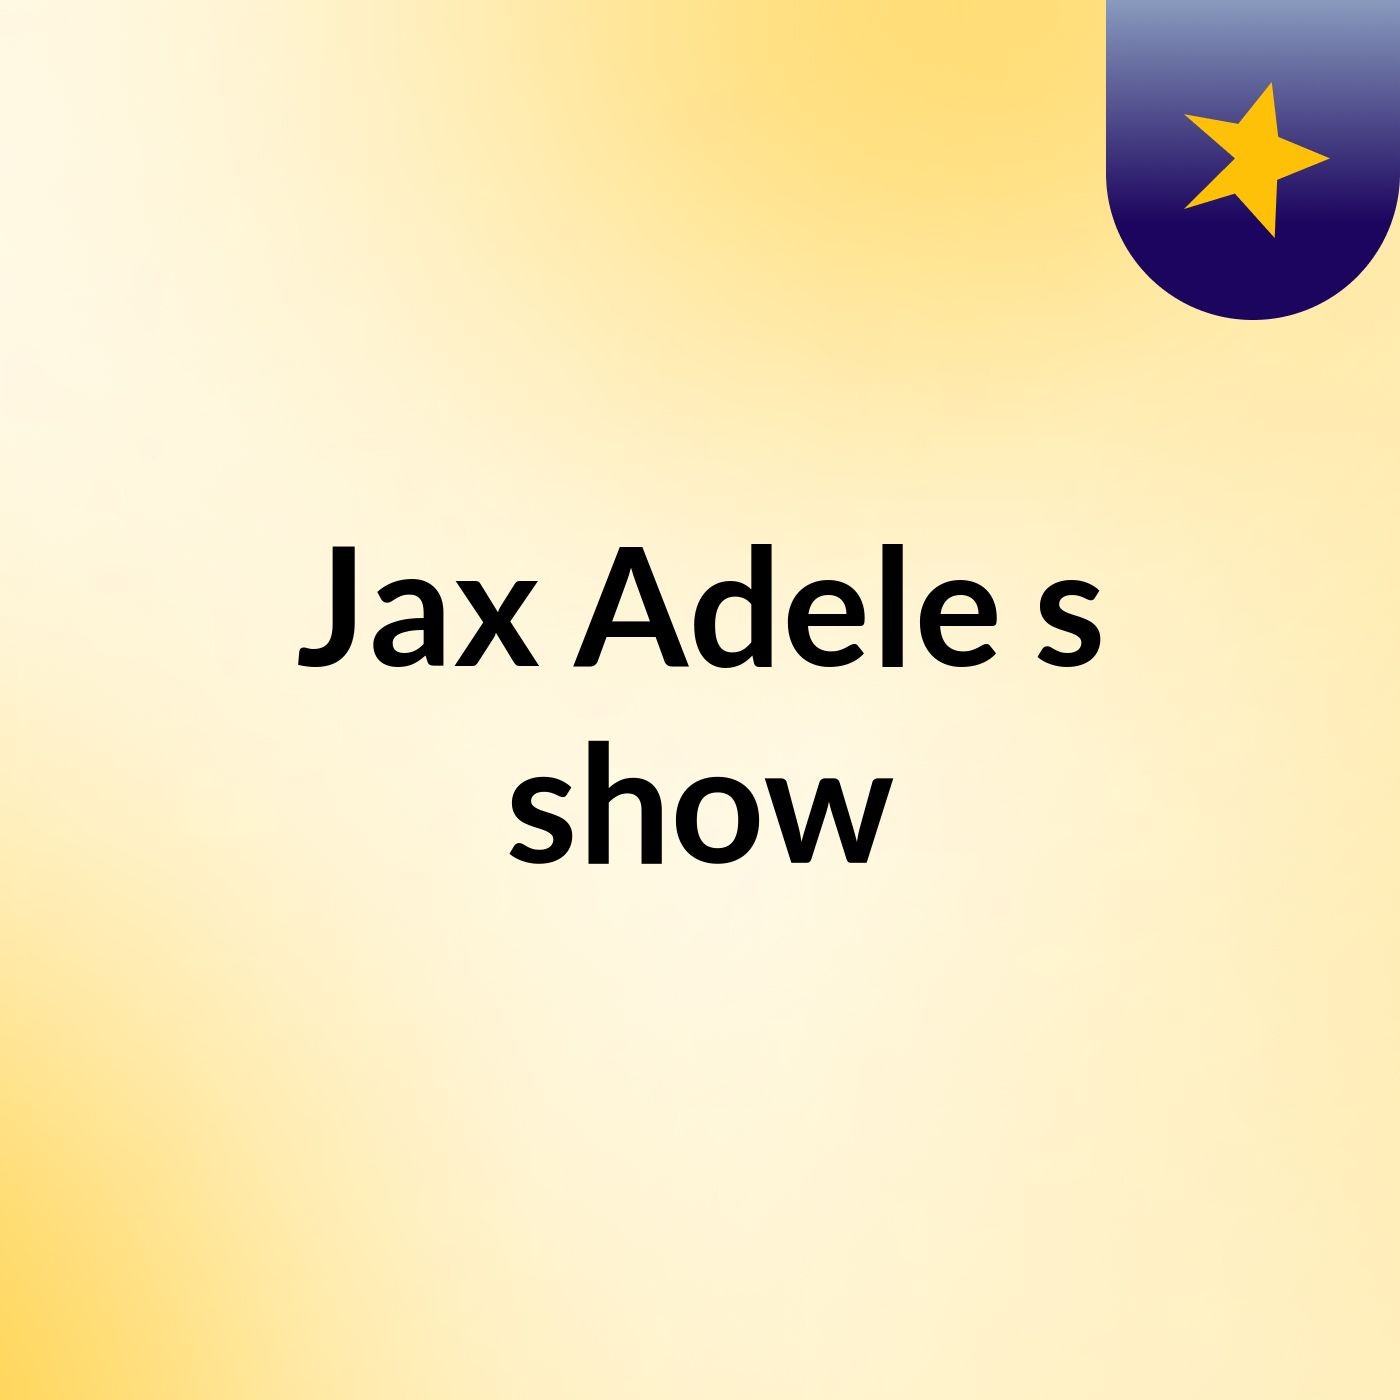 Jax Adele's show